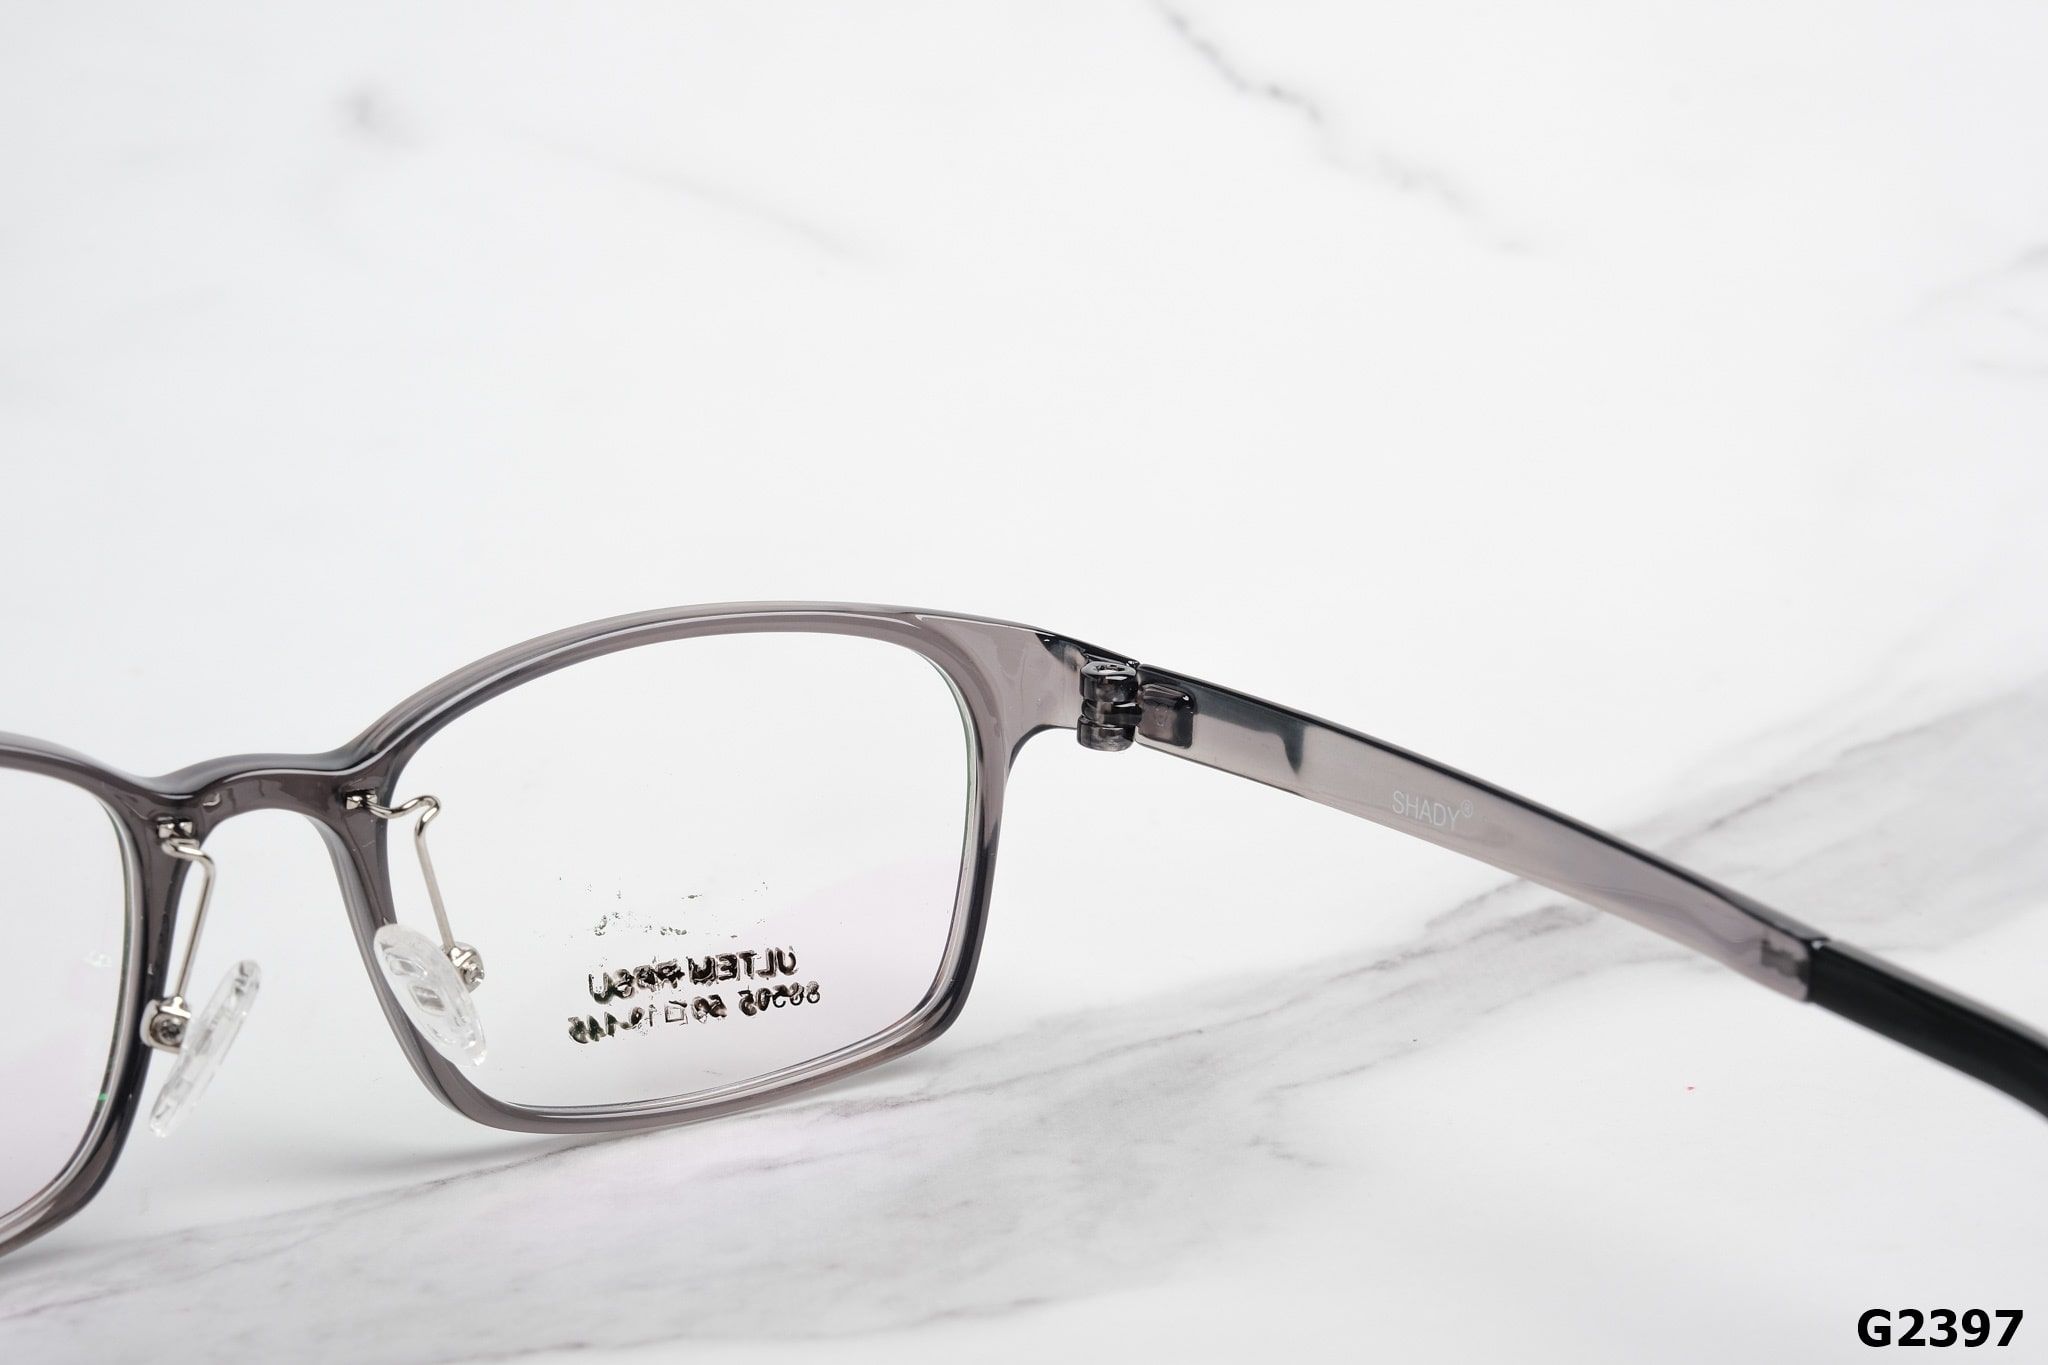  SHADY Eyewear - Glasses - G2397 